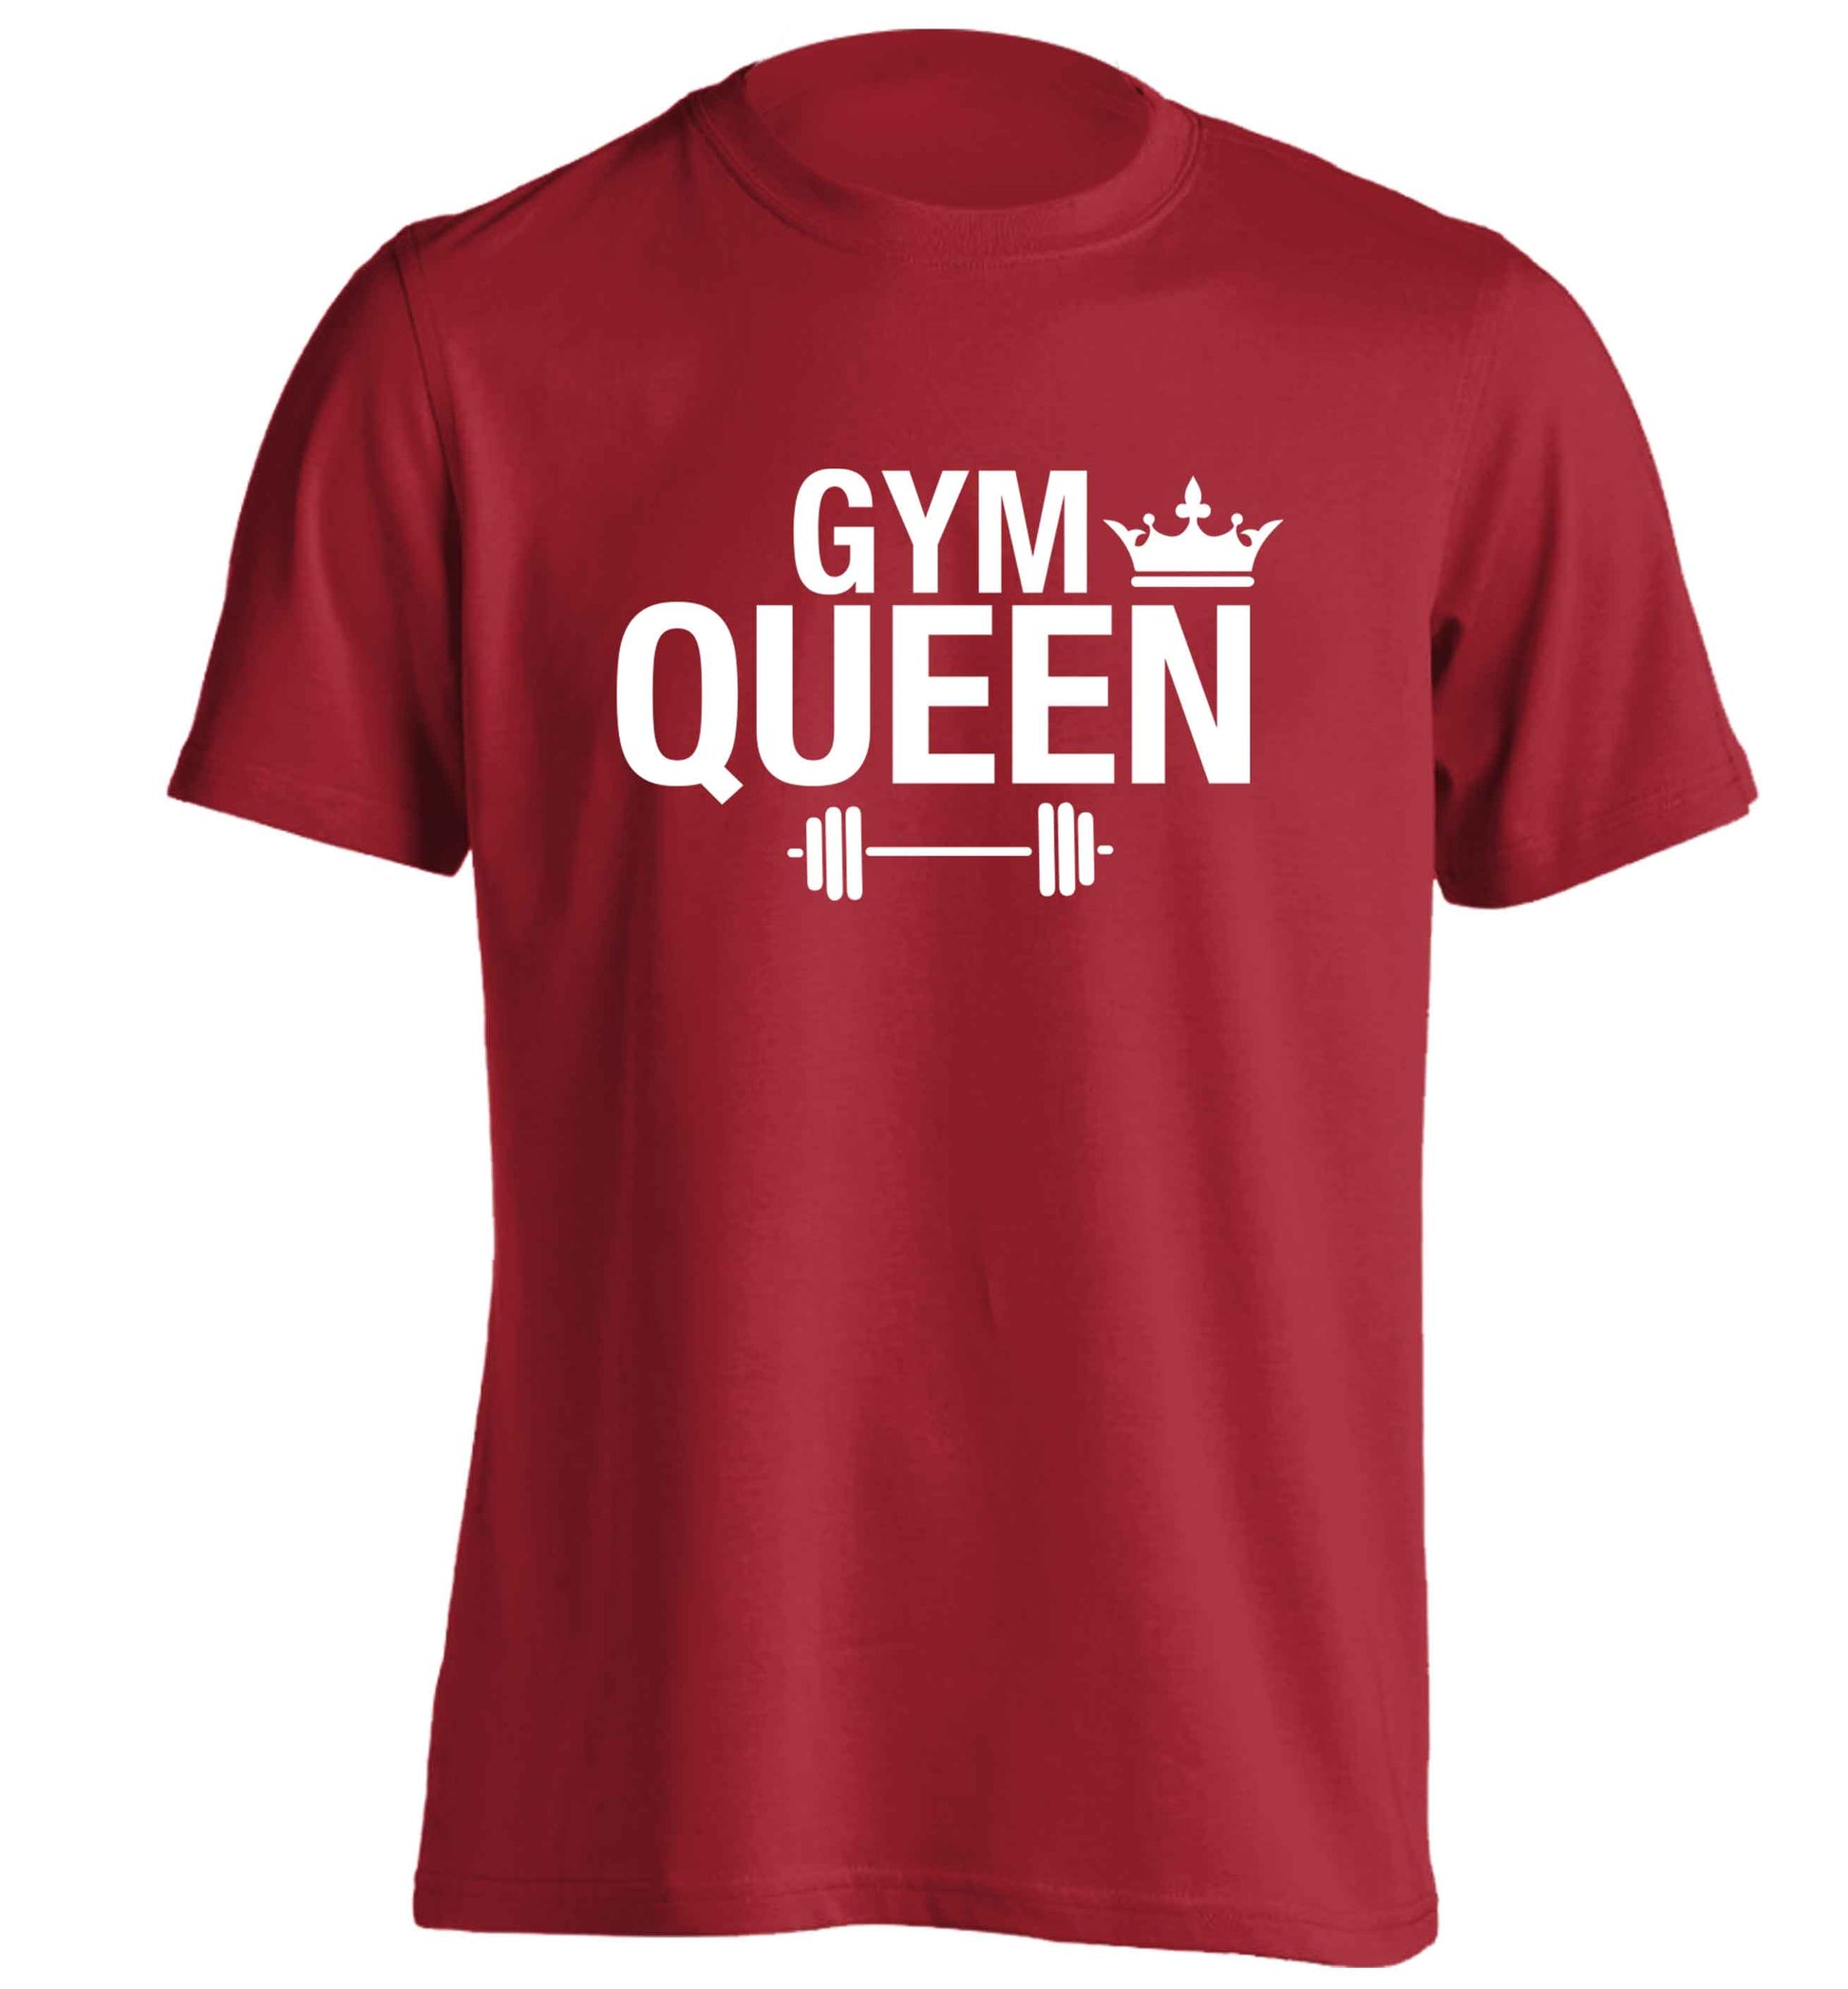 Gym queen adults unisex red Tshirt 2XL